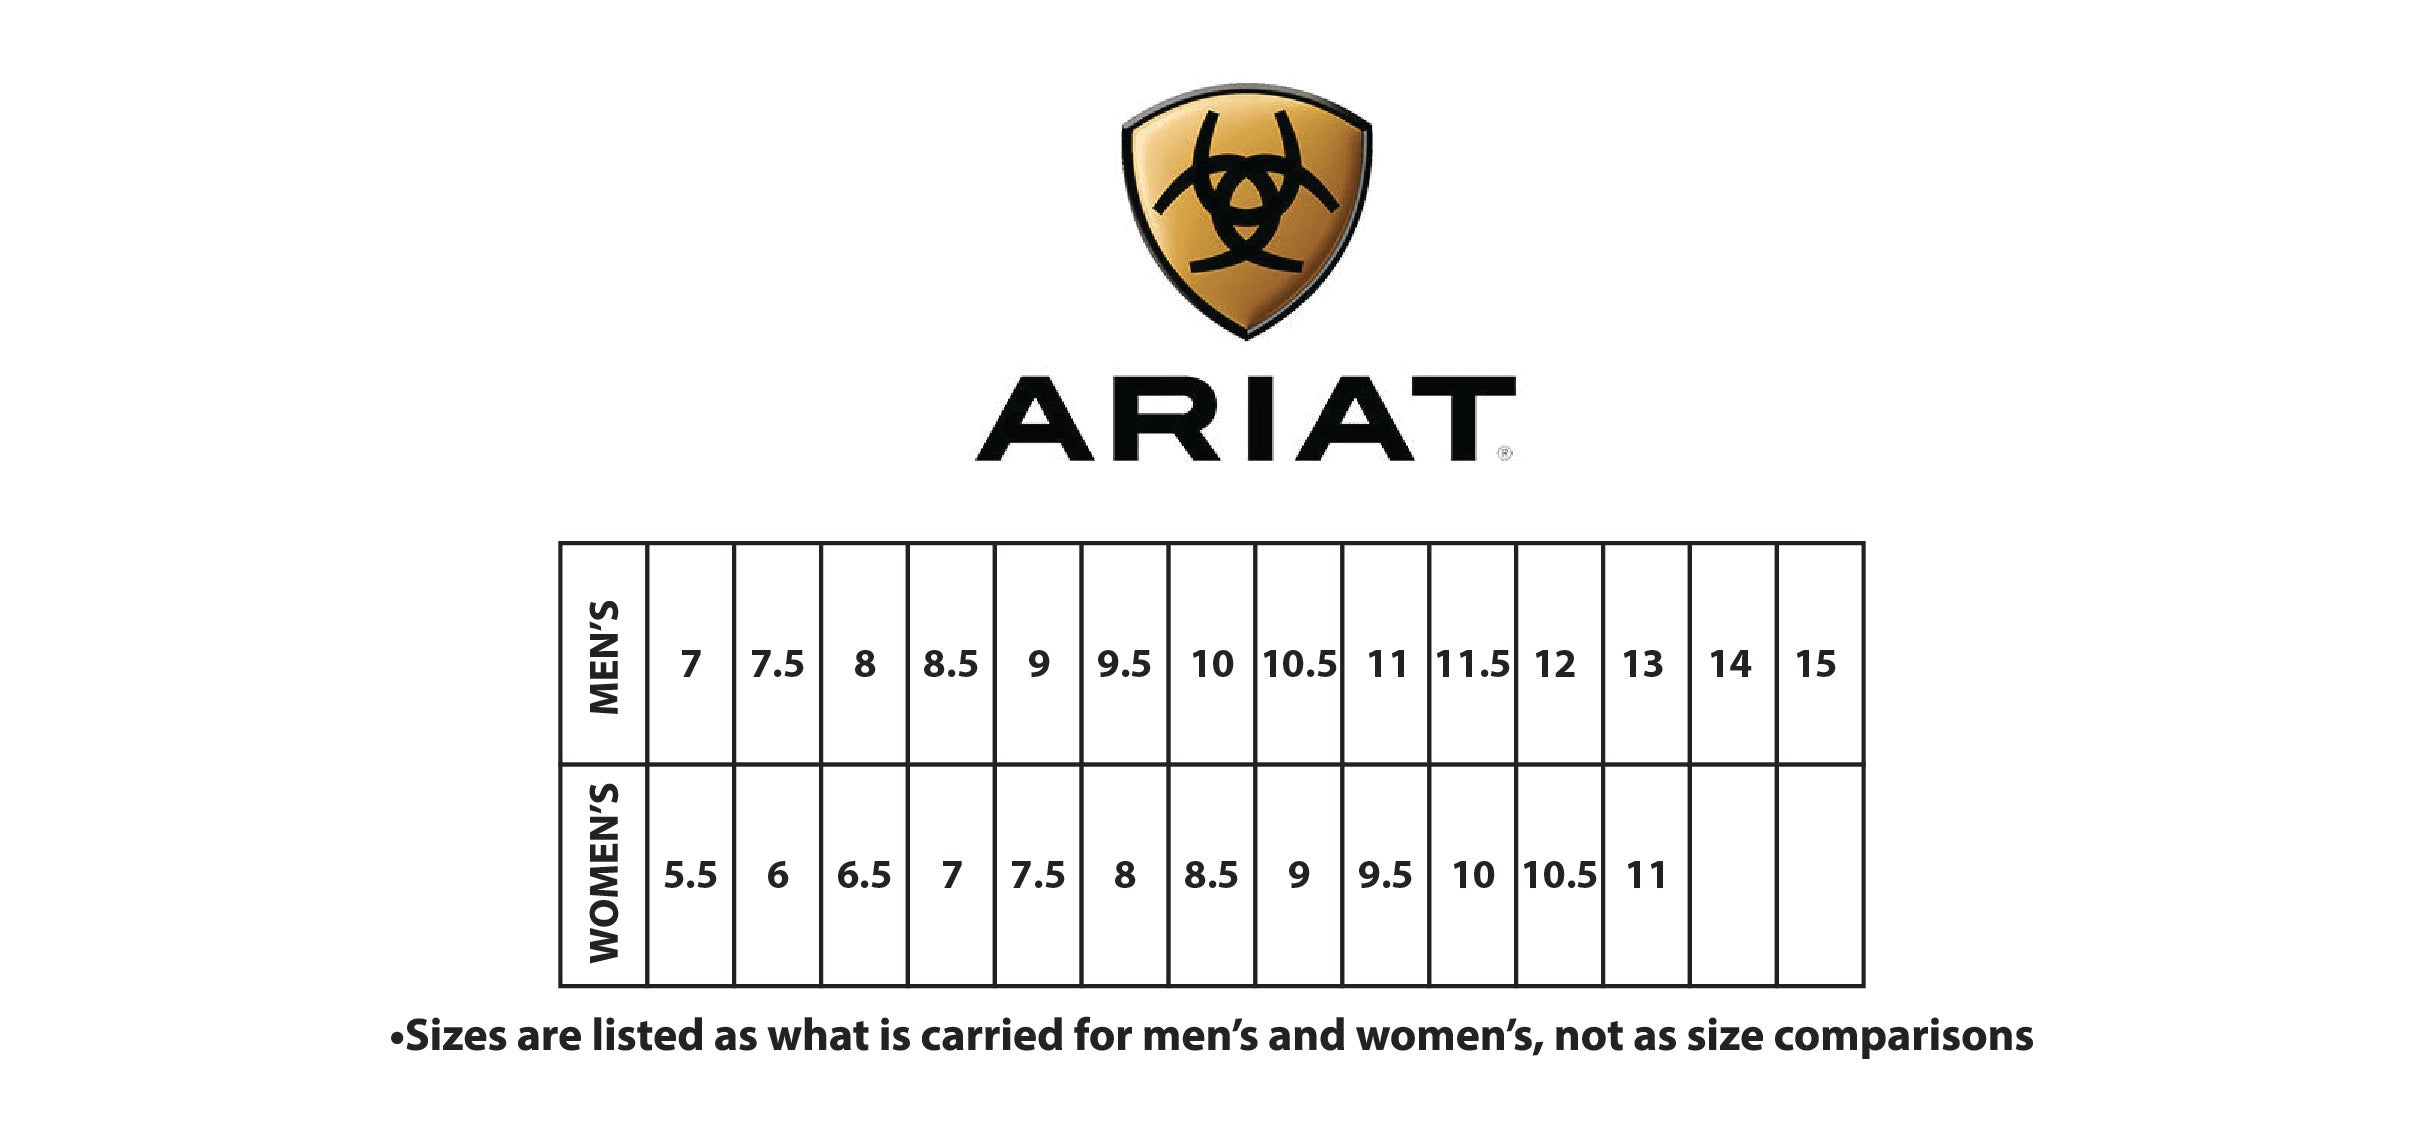 ARIAT FOOTWEAR SIZE CHART